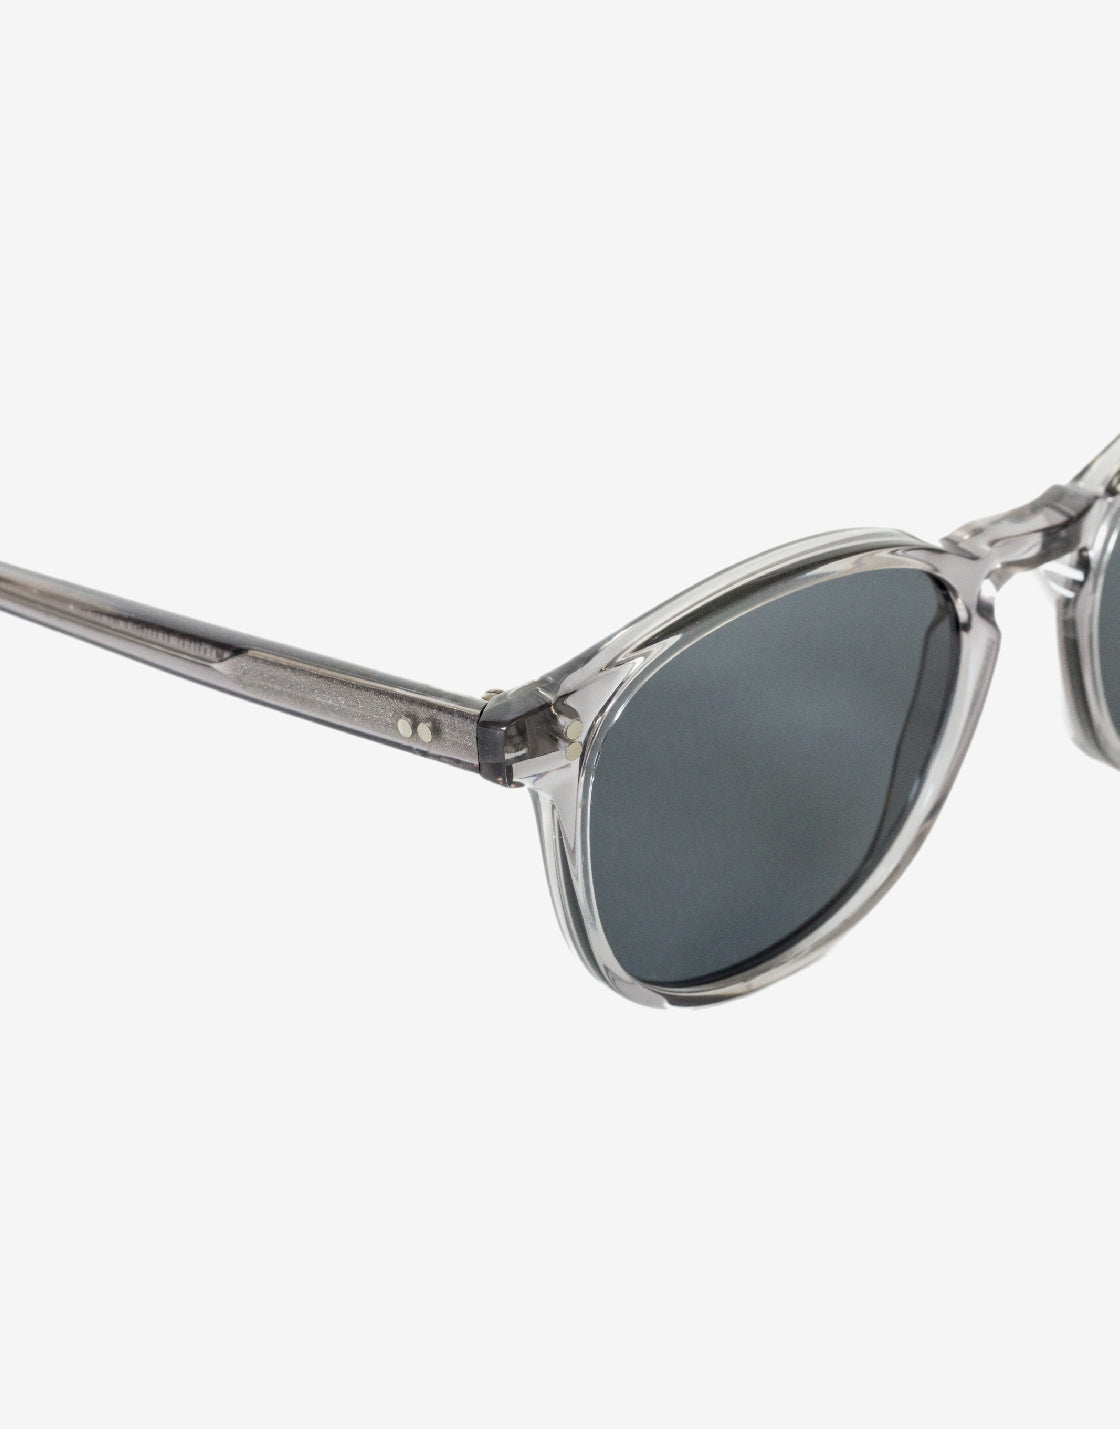 OLC Optics  Italian Made Sunglasses – Routine Heroes